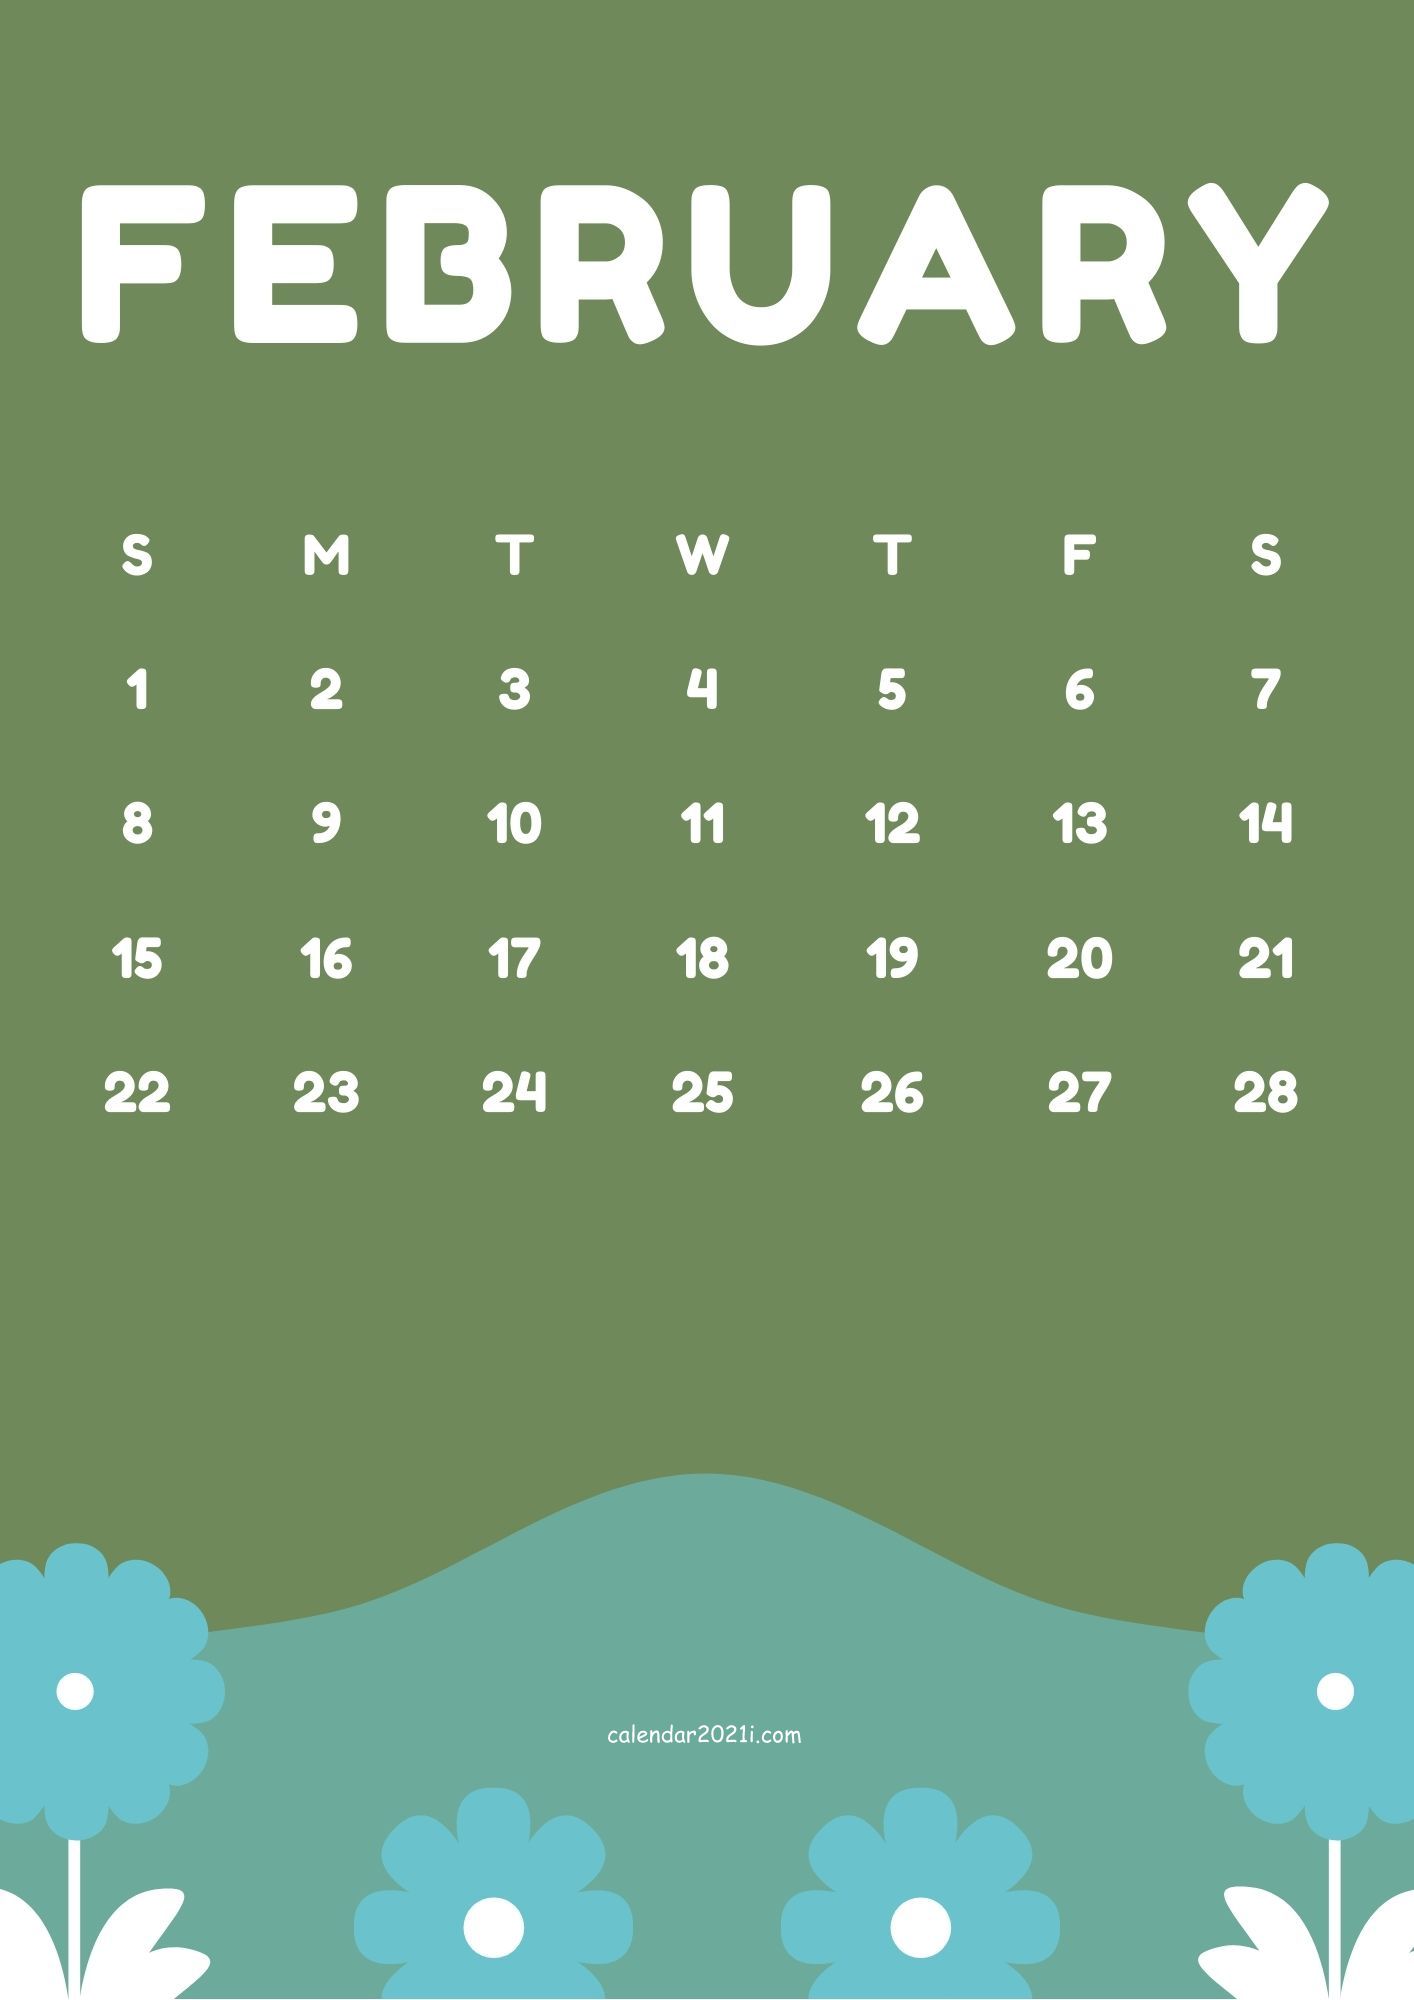 Free February 2021 Floral Calendar